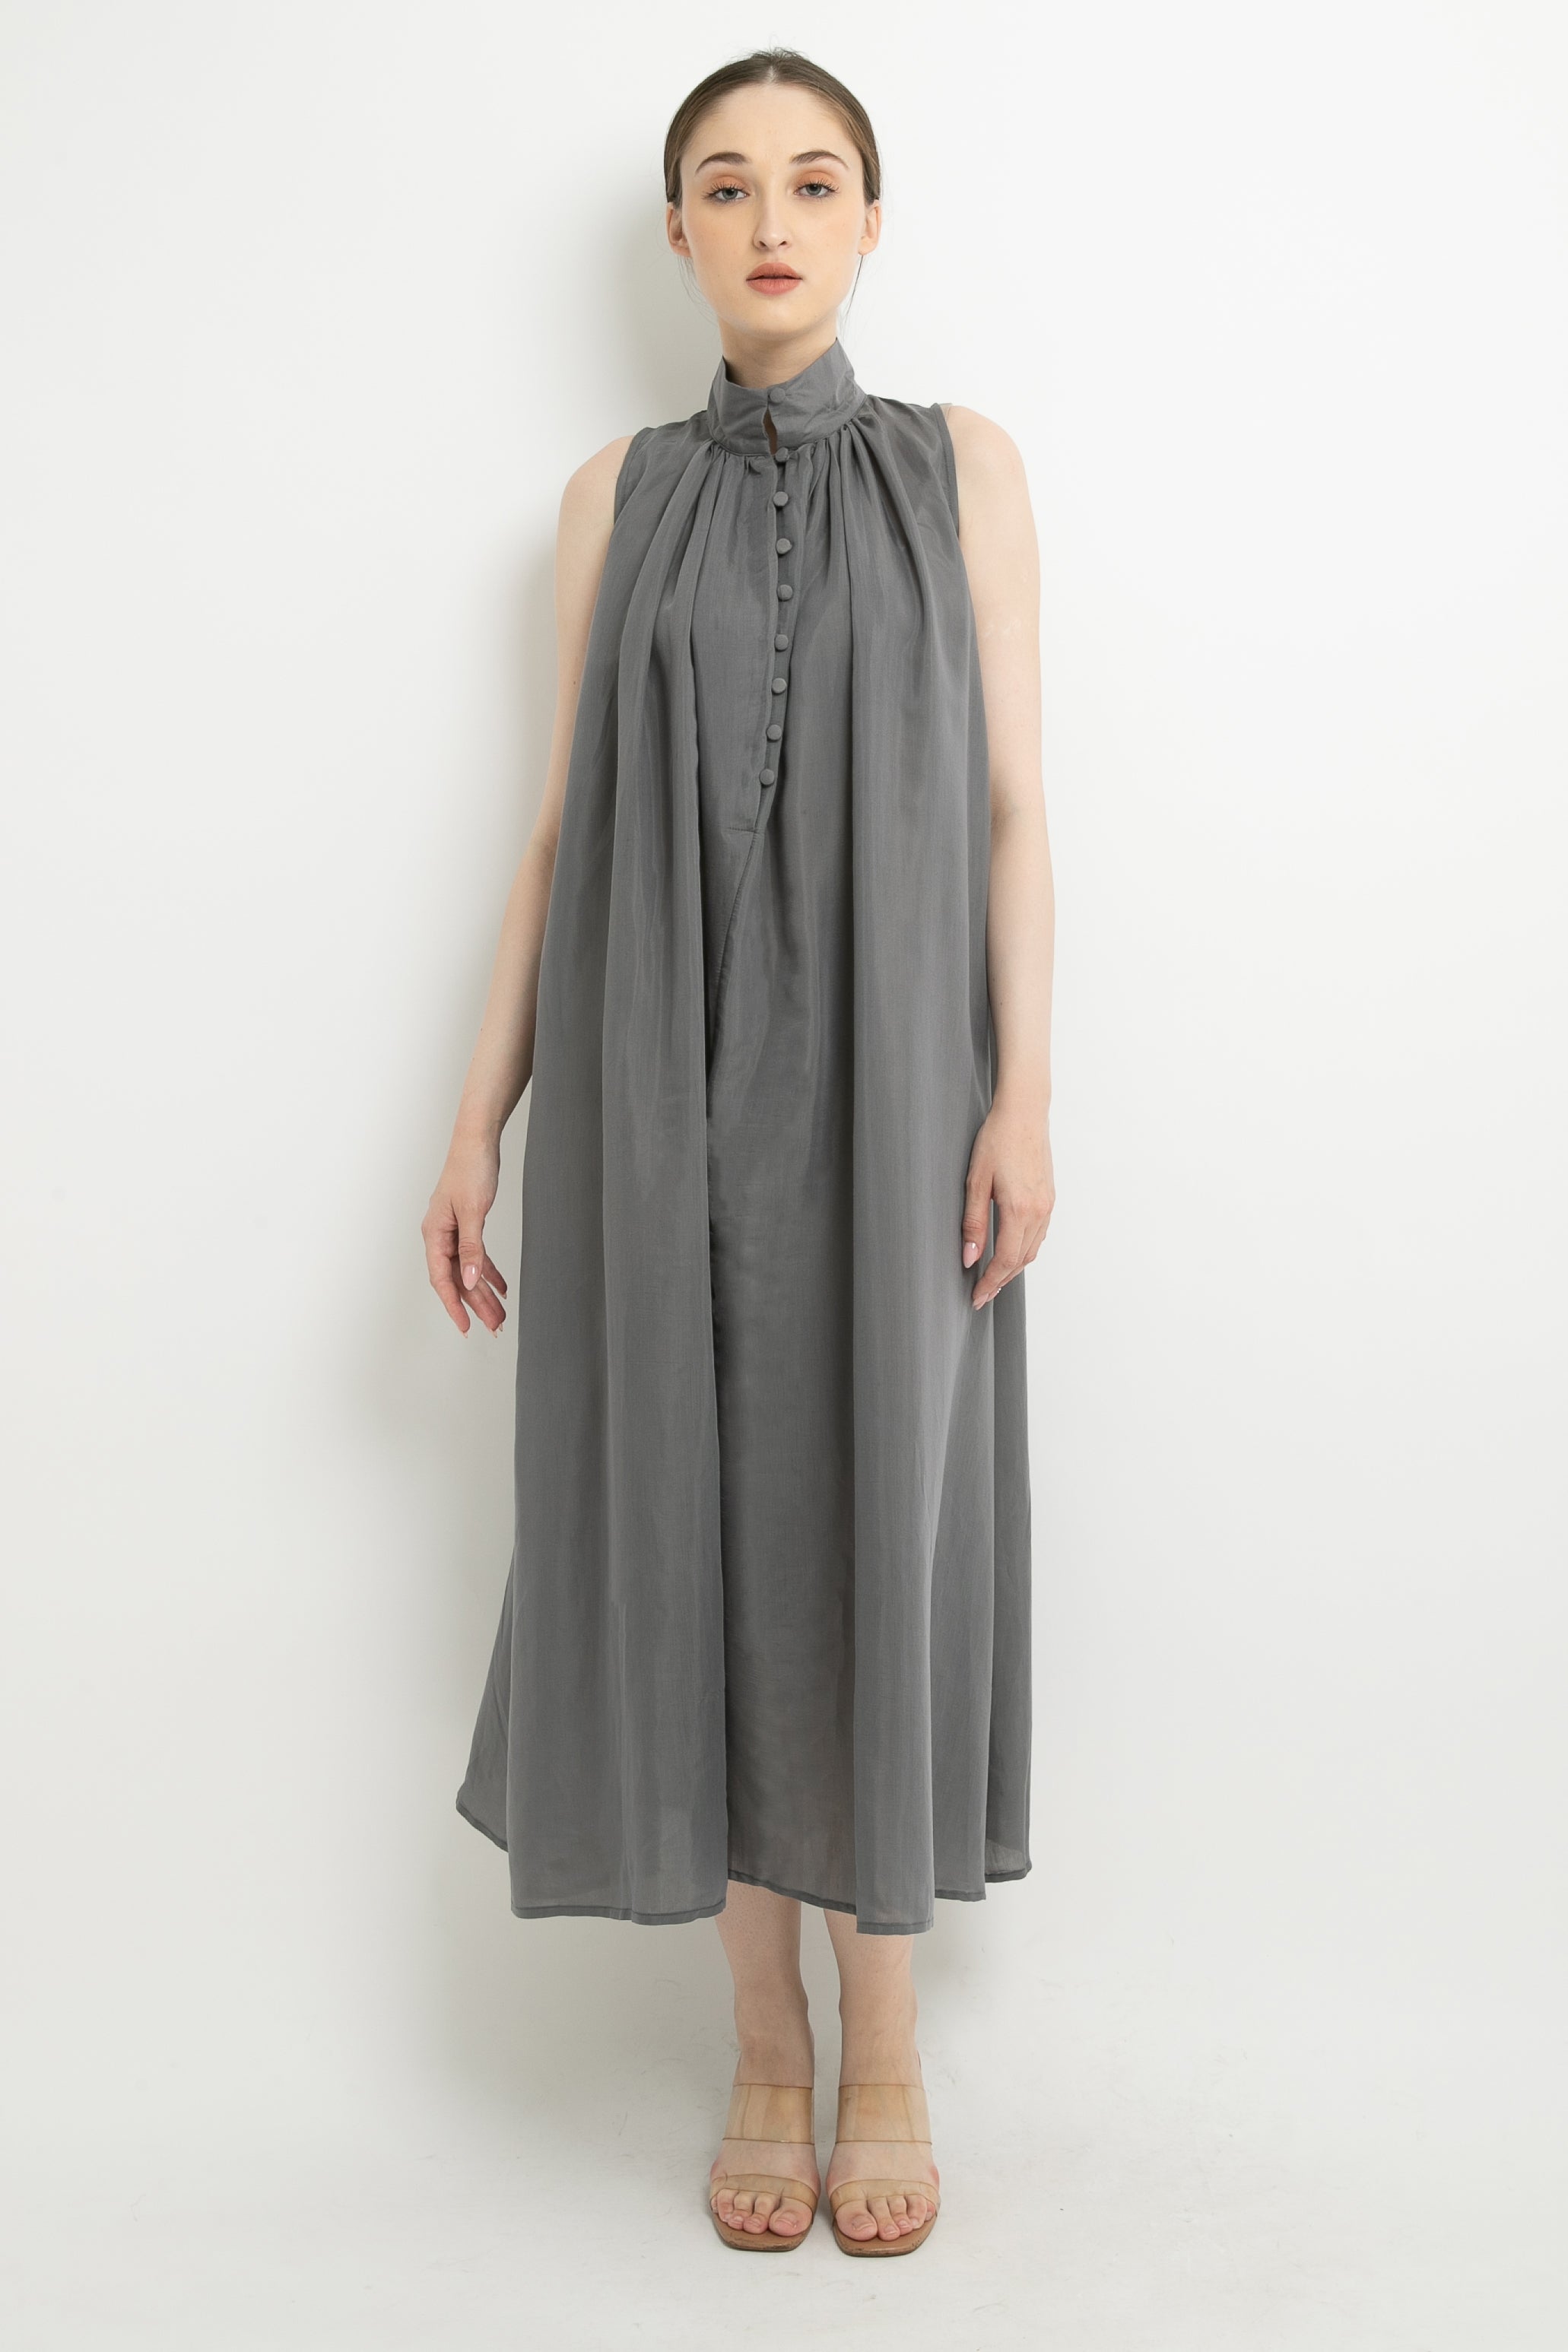 Meerith Grey Dress